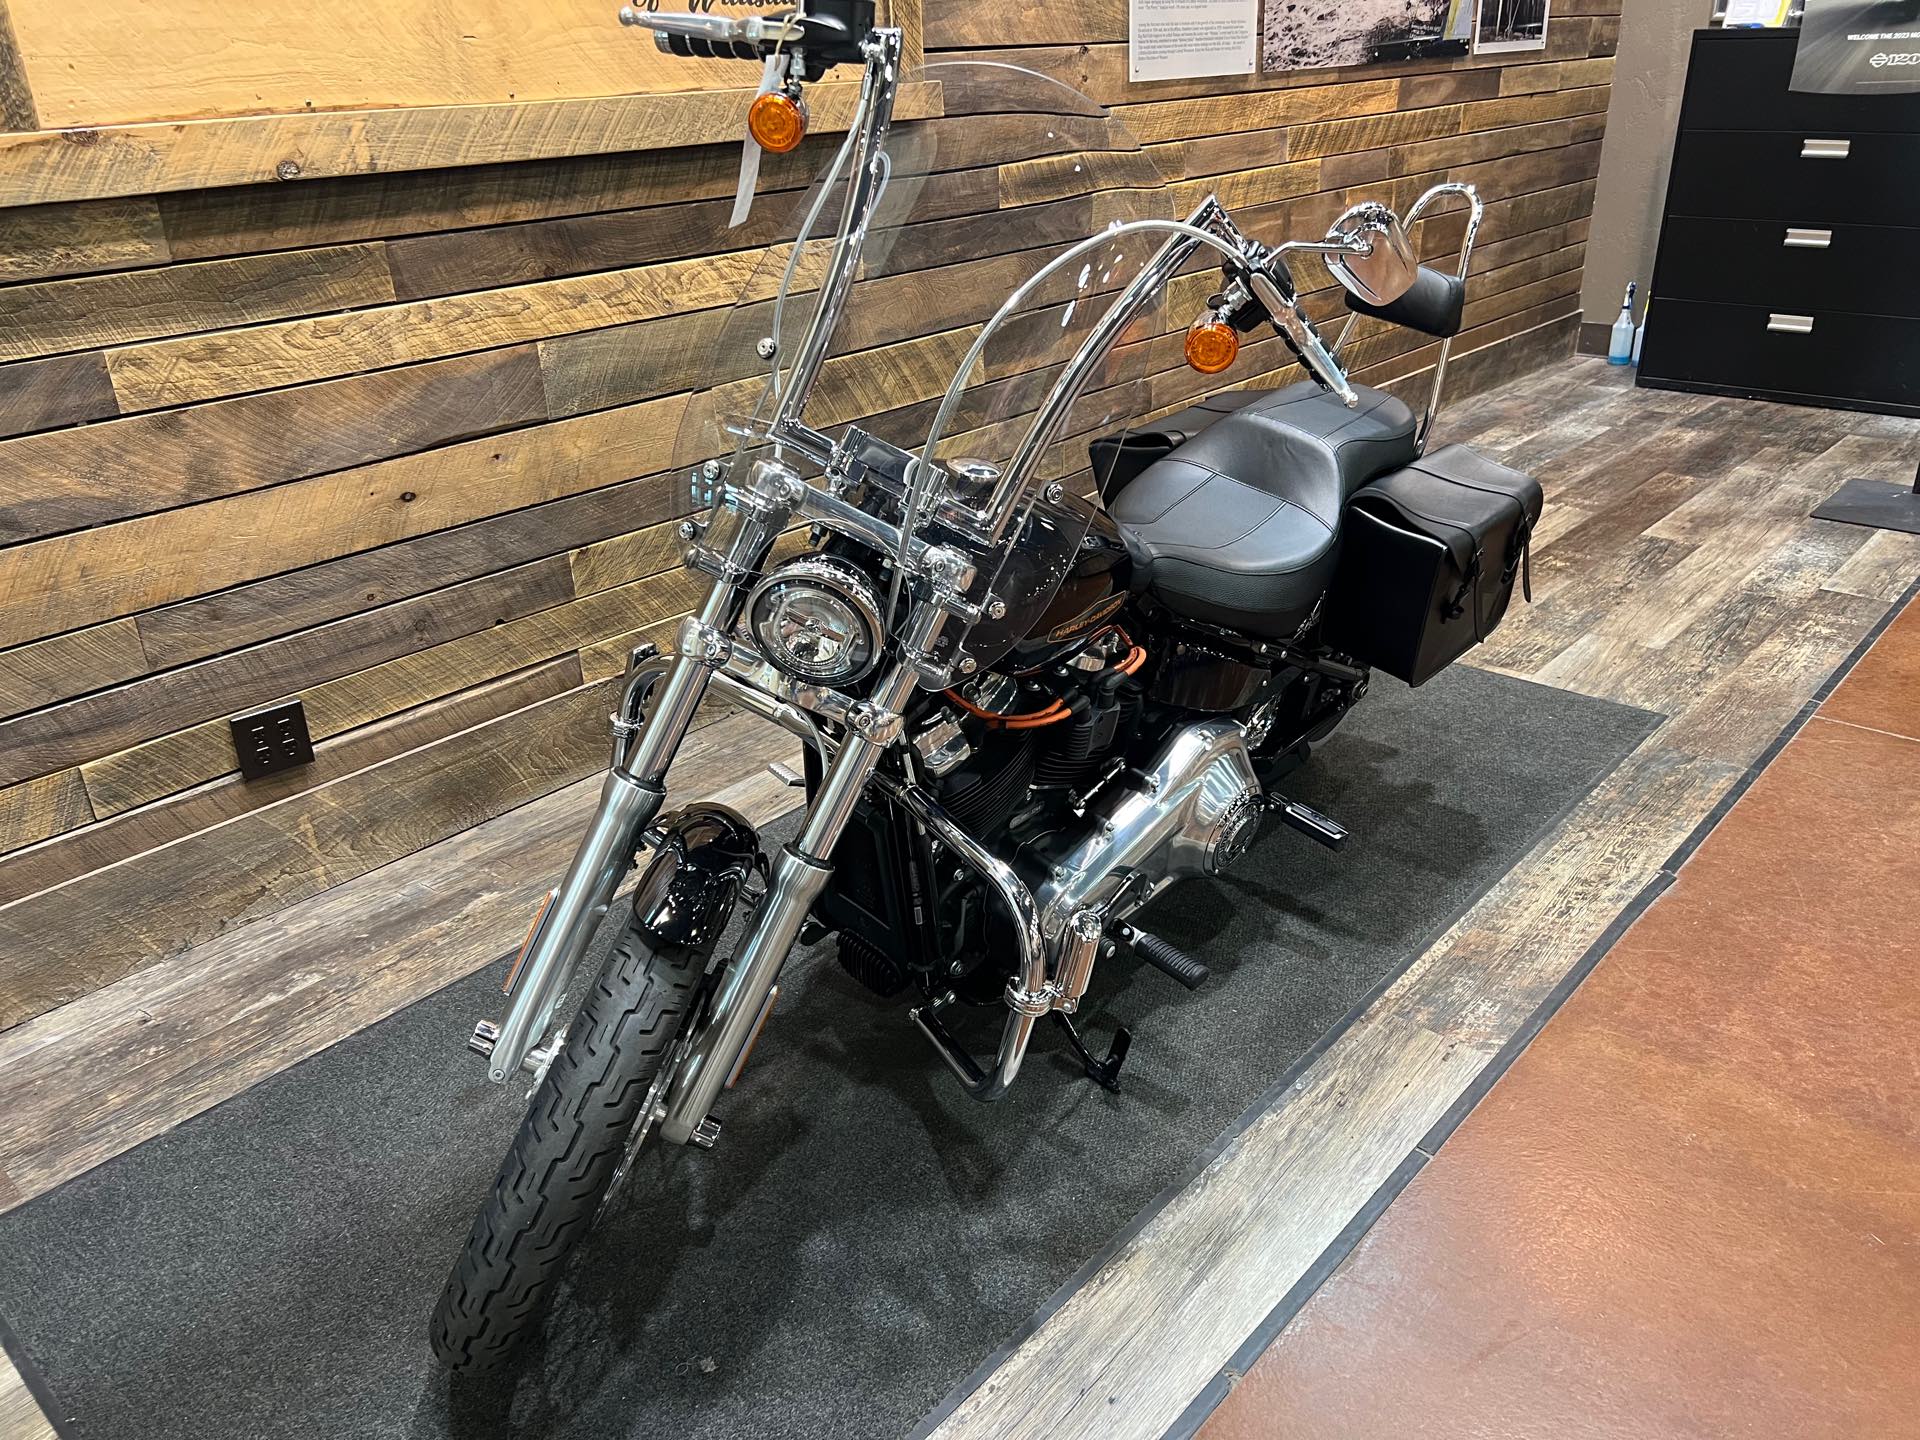 2021 Harley-Davidson Cruiser Softail Standard at Bull Falls Harley-Davidson